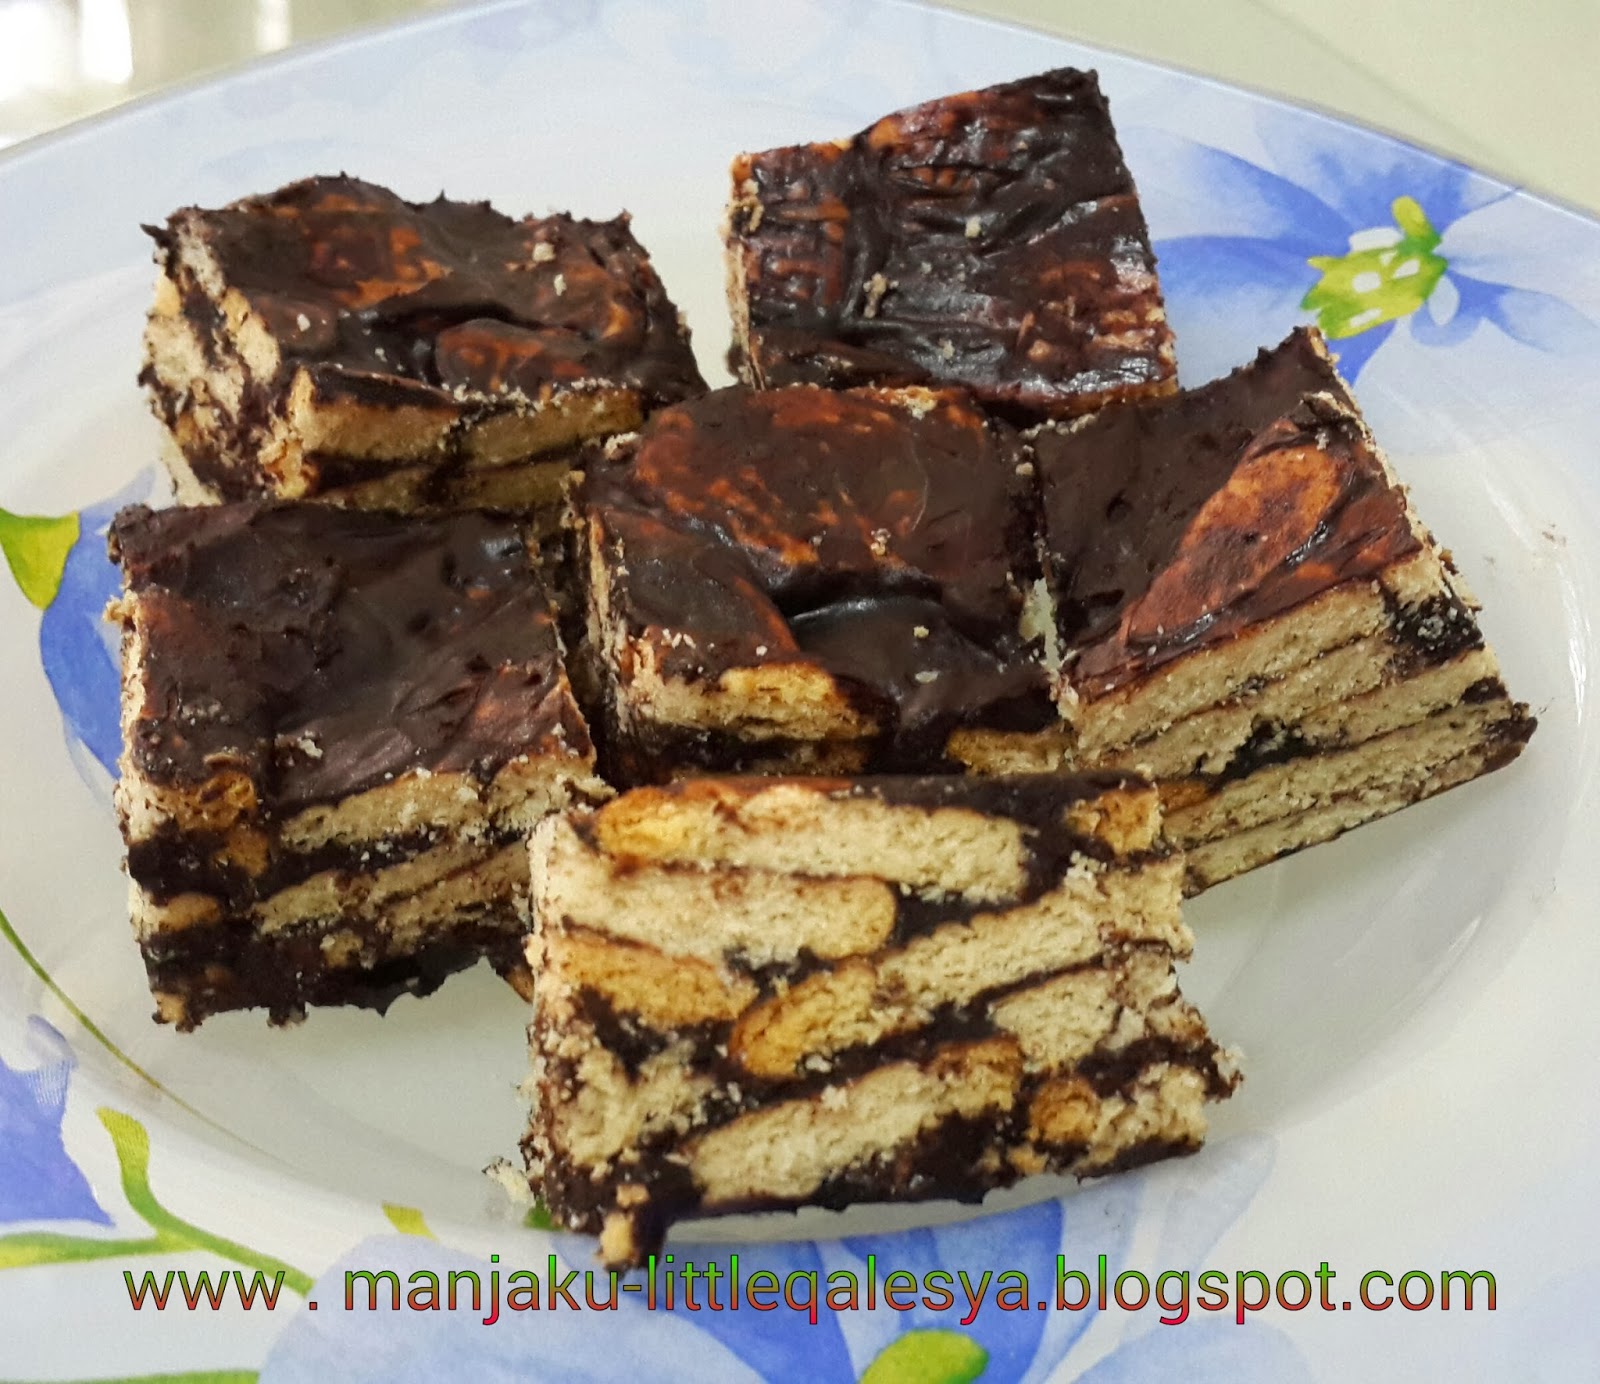 Manjaku Little Qalesya: Kek Batik Biskut Marie